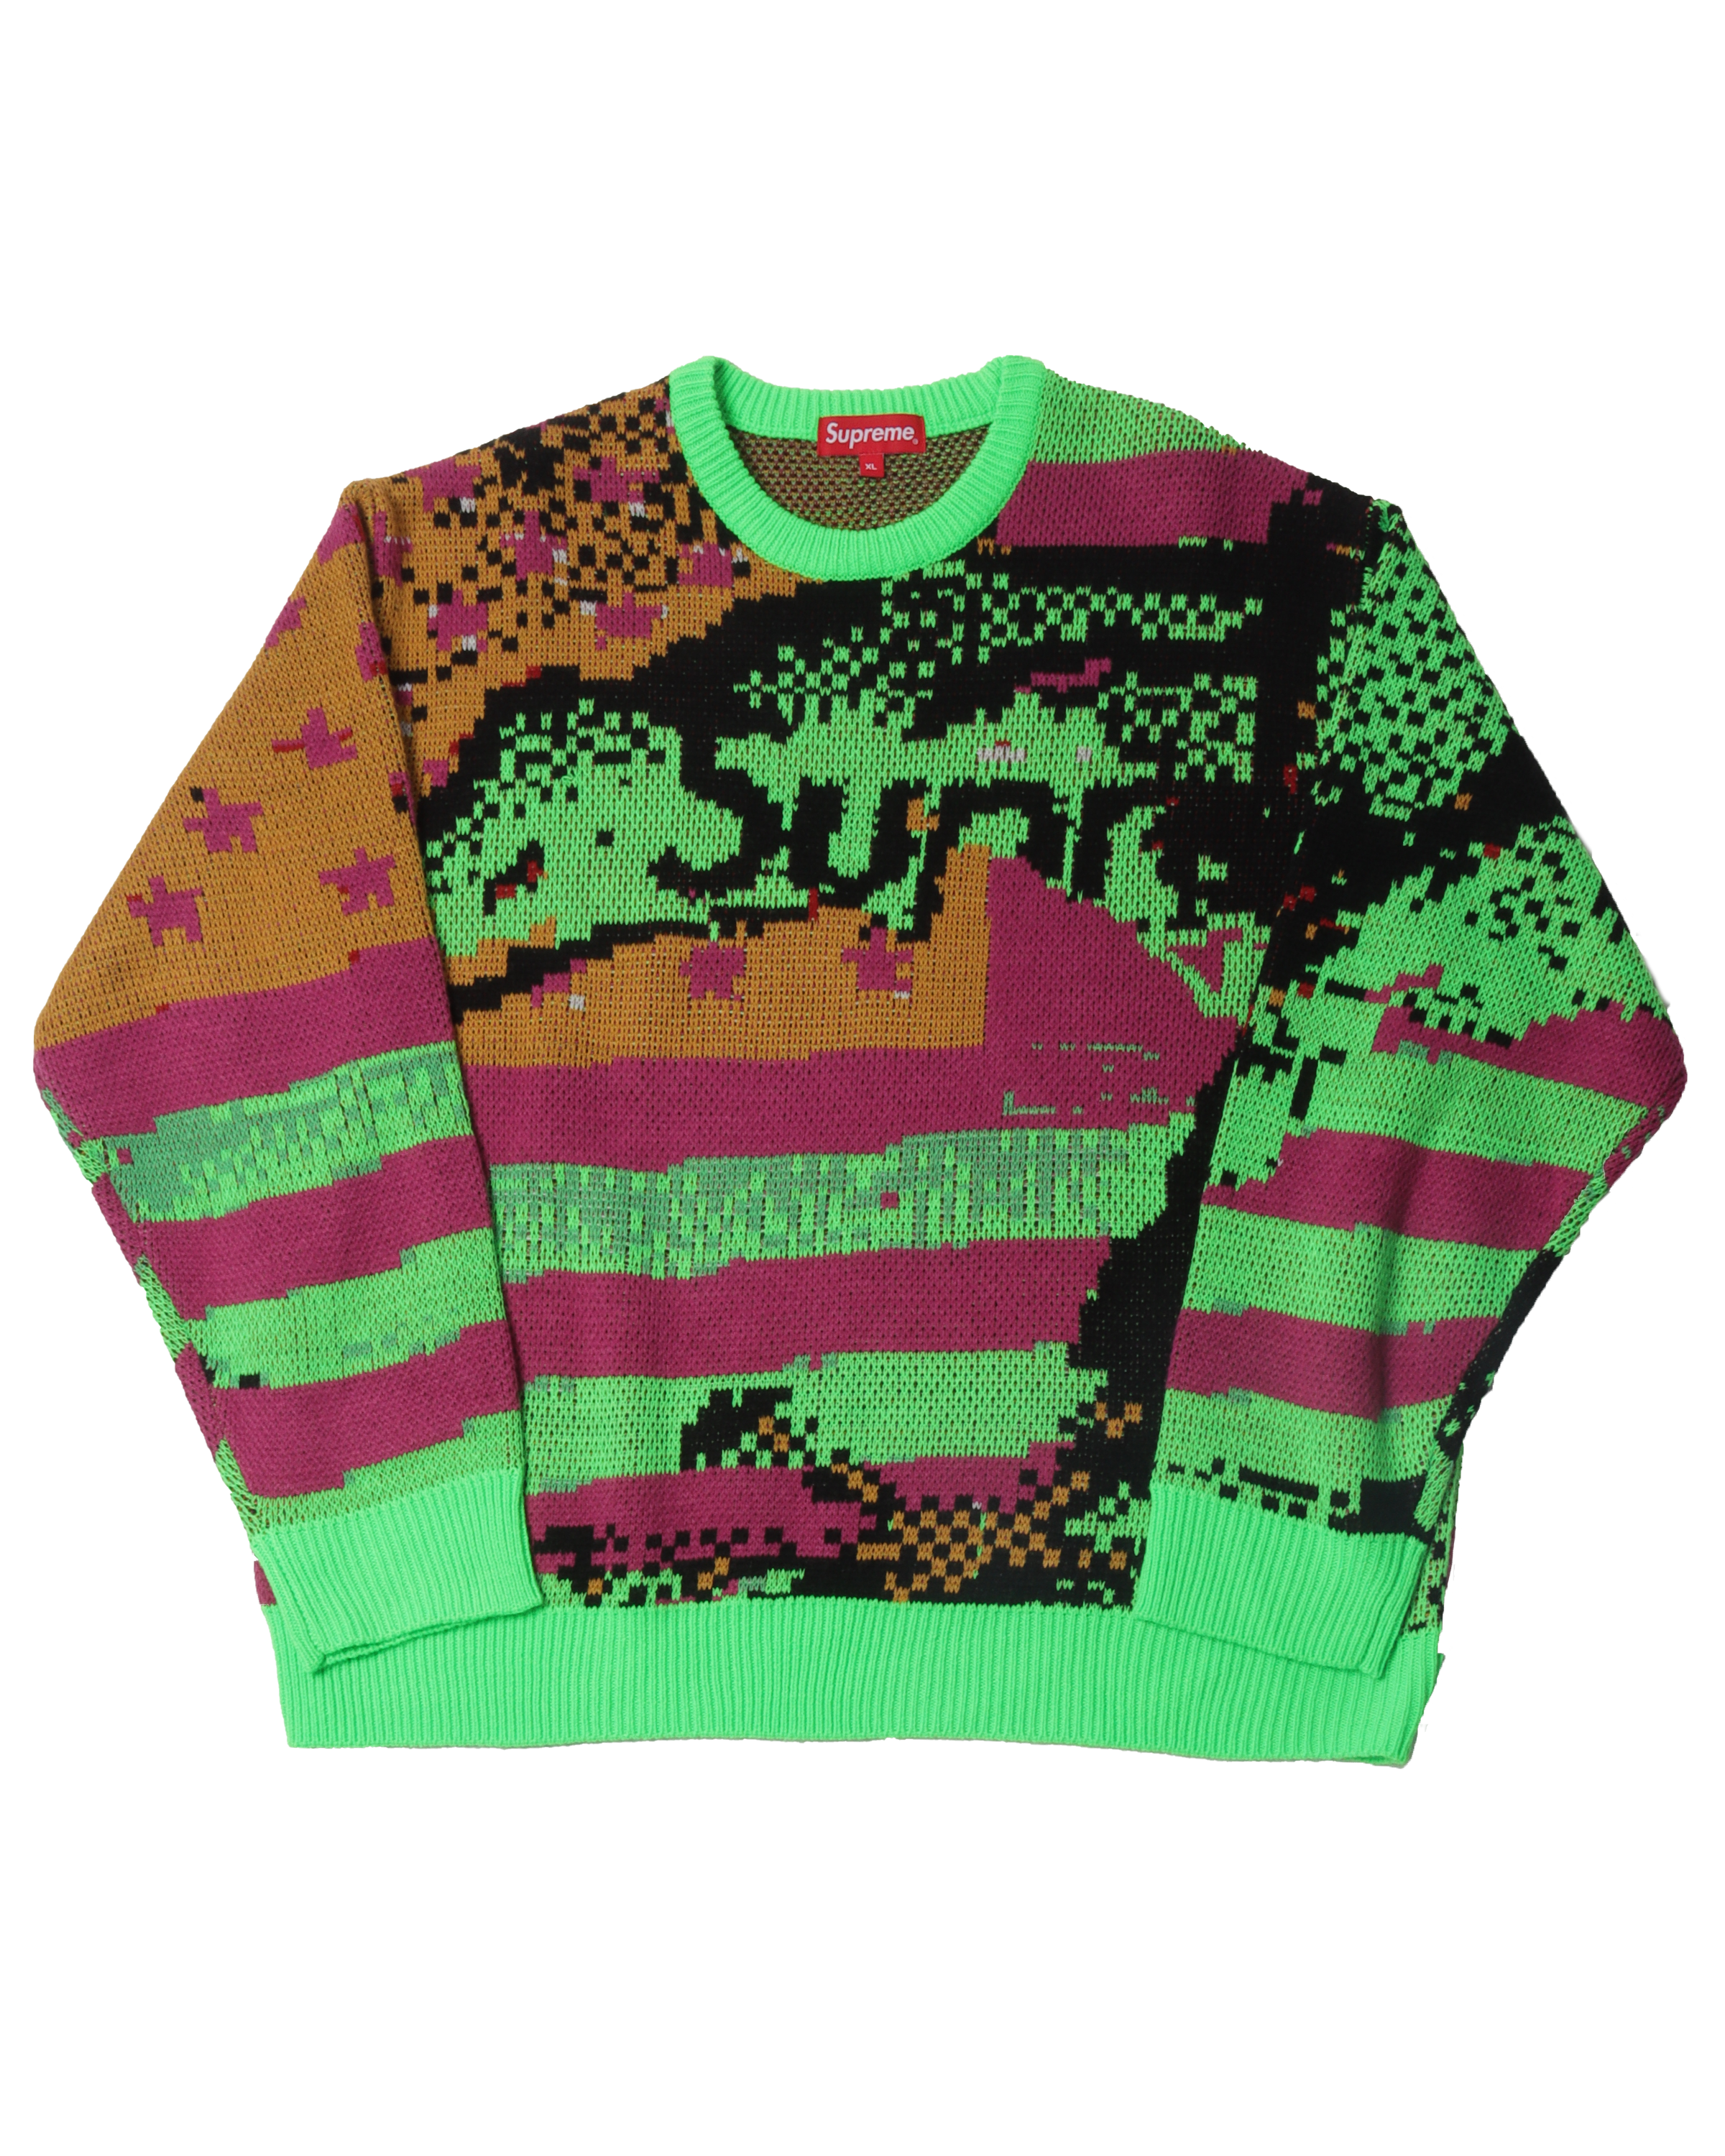 Supreme Digital Flag Sweater Green L